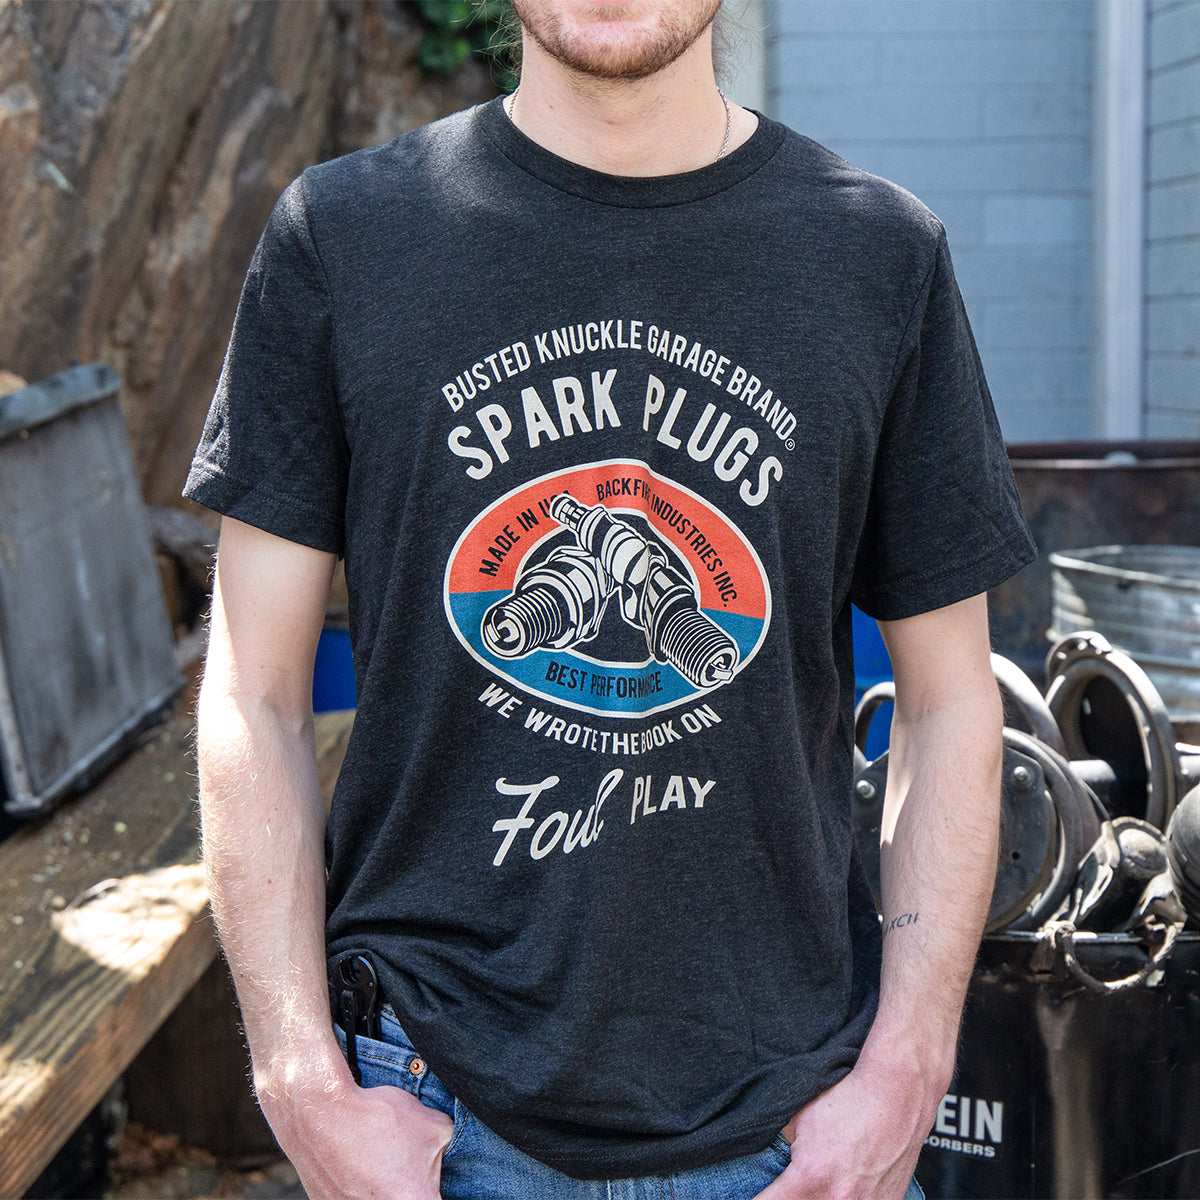 Busted Knuckle Garage Carguy Foul Play Spark Plug T-Shirt